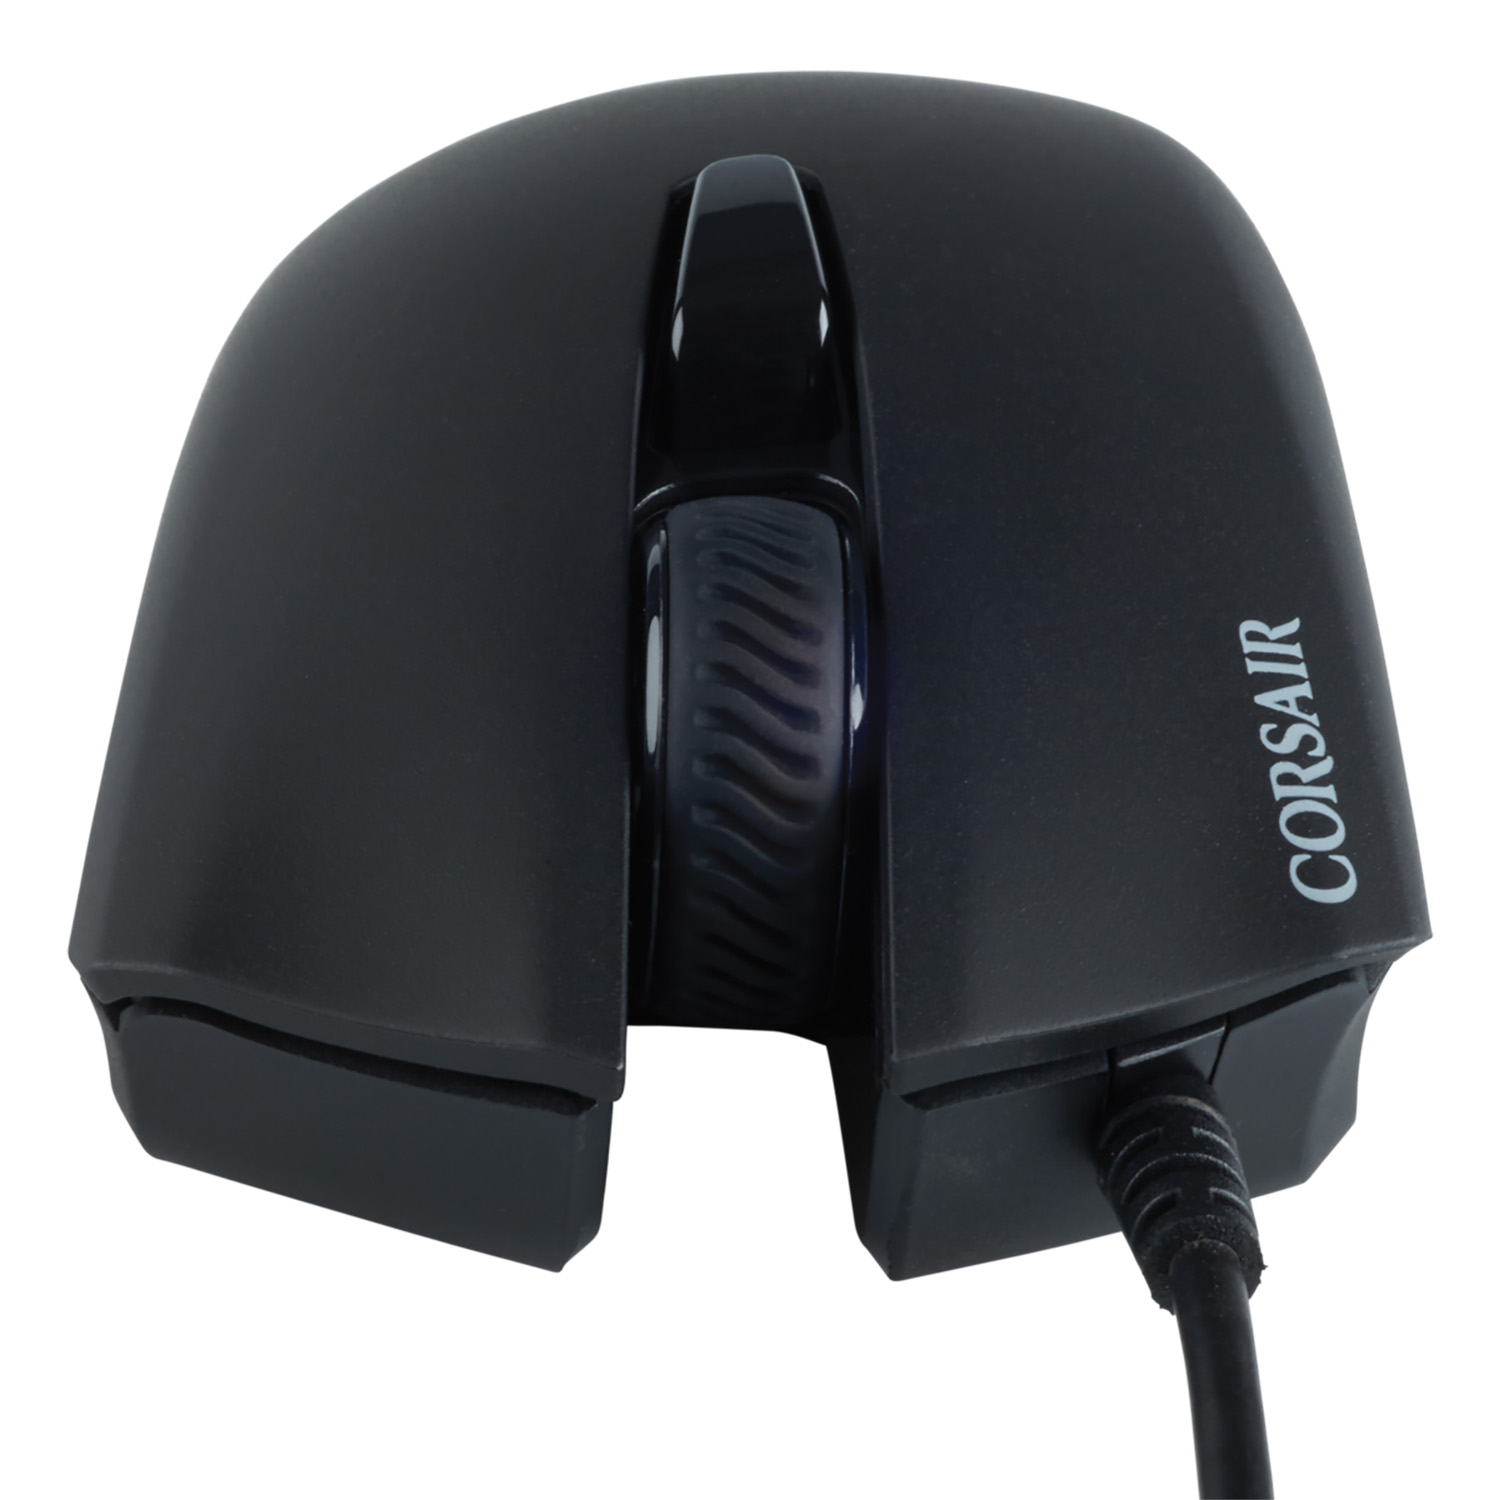 CORSAIR Harpoon RGB PRO FPS/MOBA Gaming Mouse, Black, Backlit RGB LED - image 4 of 10